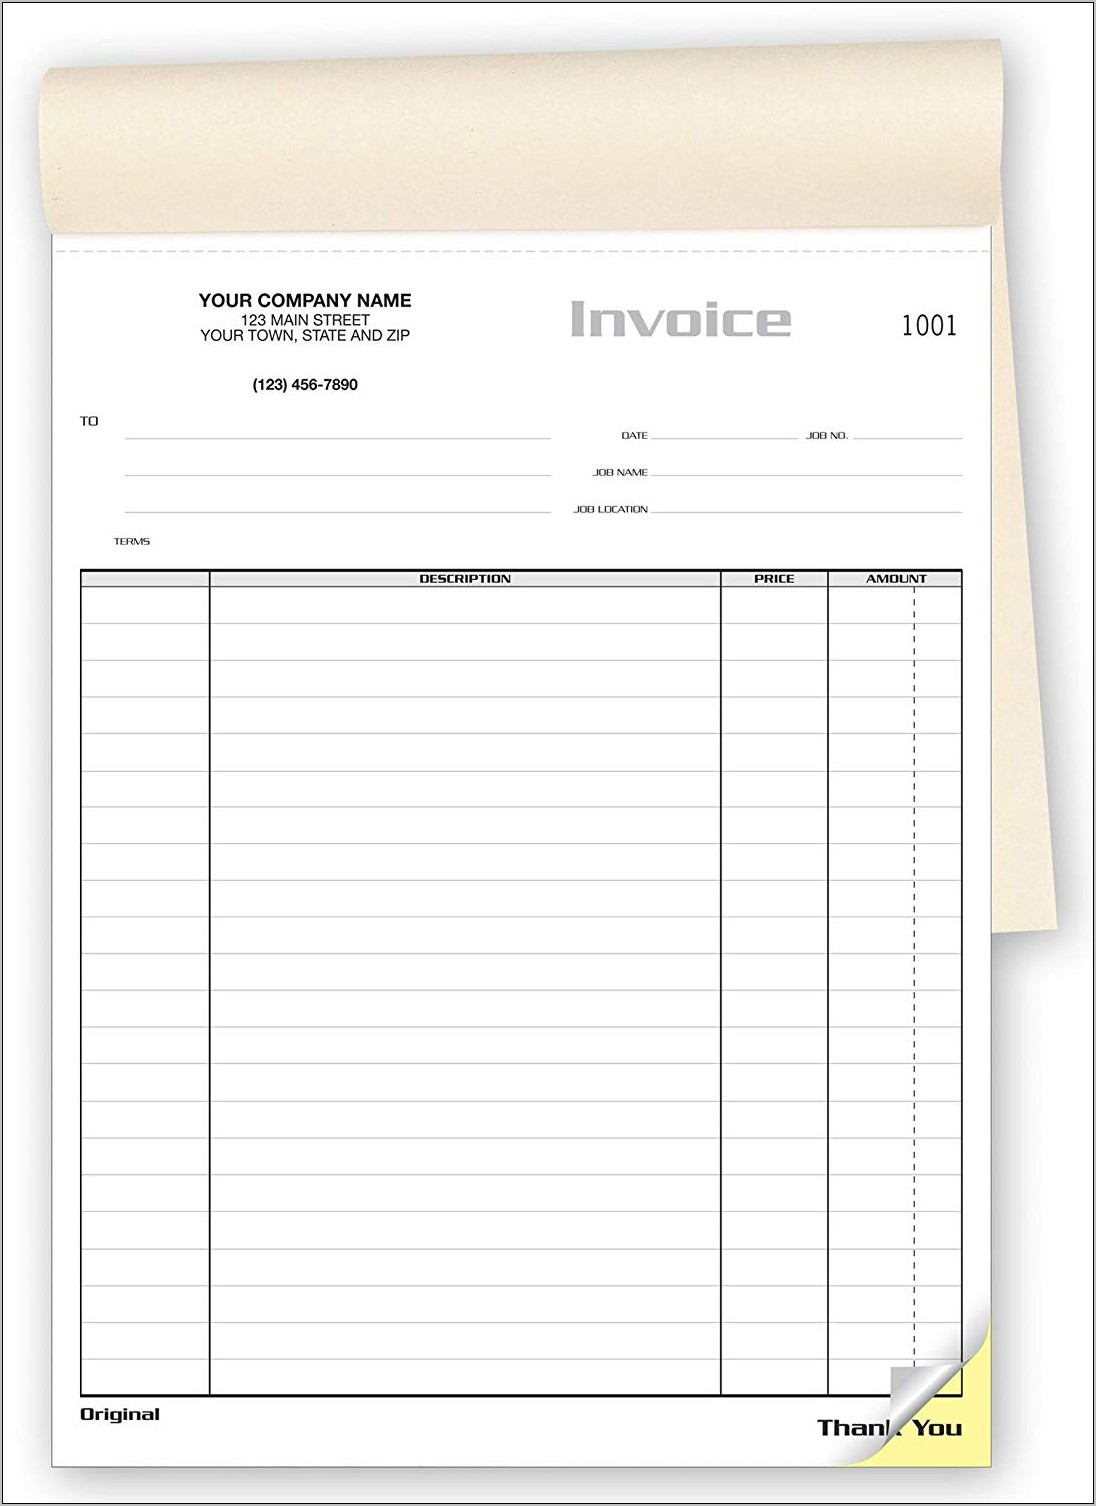 Printable Job Invoice Templates